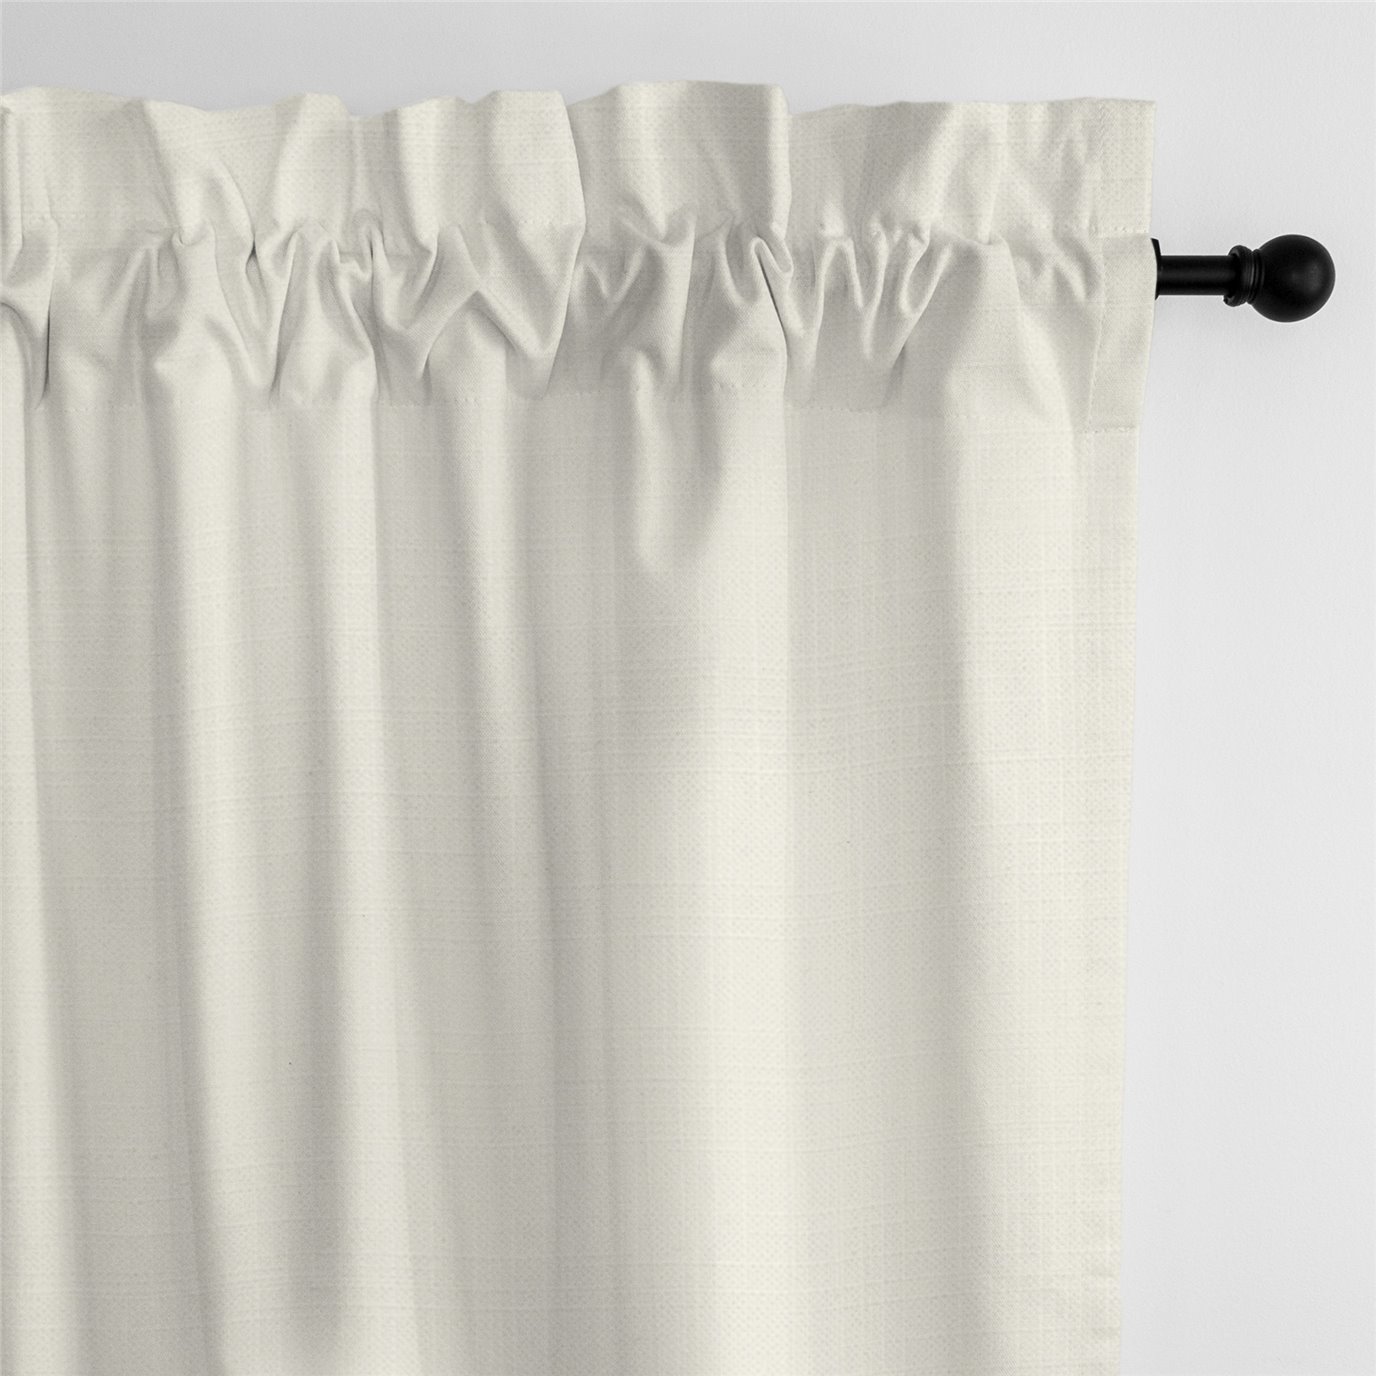 Ancebridge Vanilla Pole Top Drapery Panel - Pair - Size 50"x144"